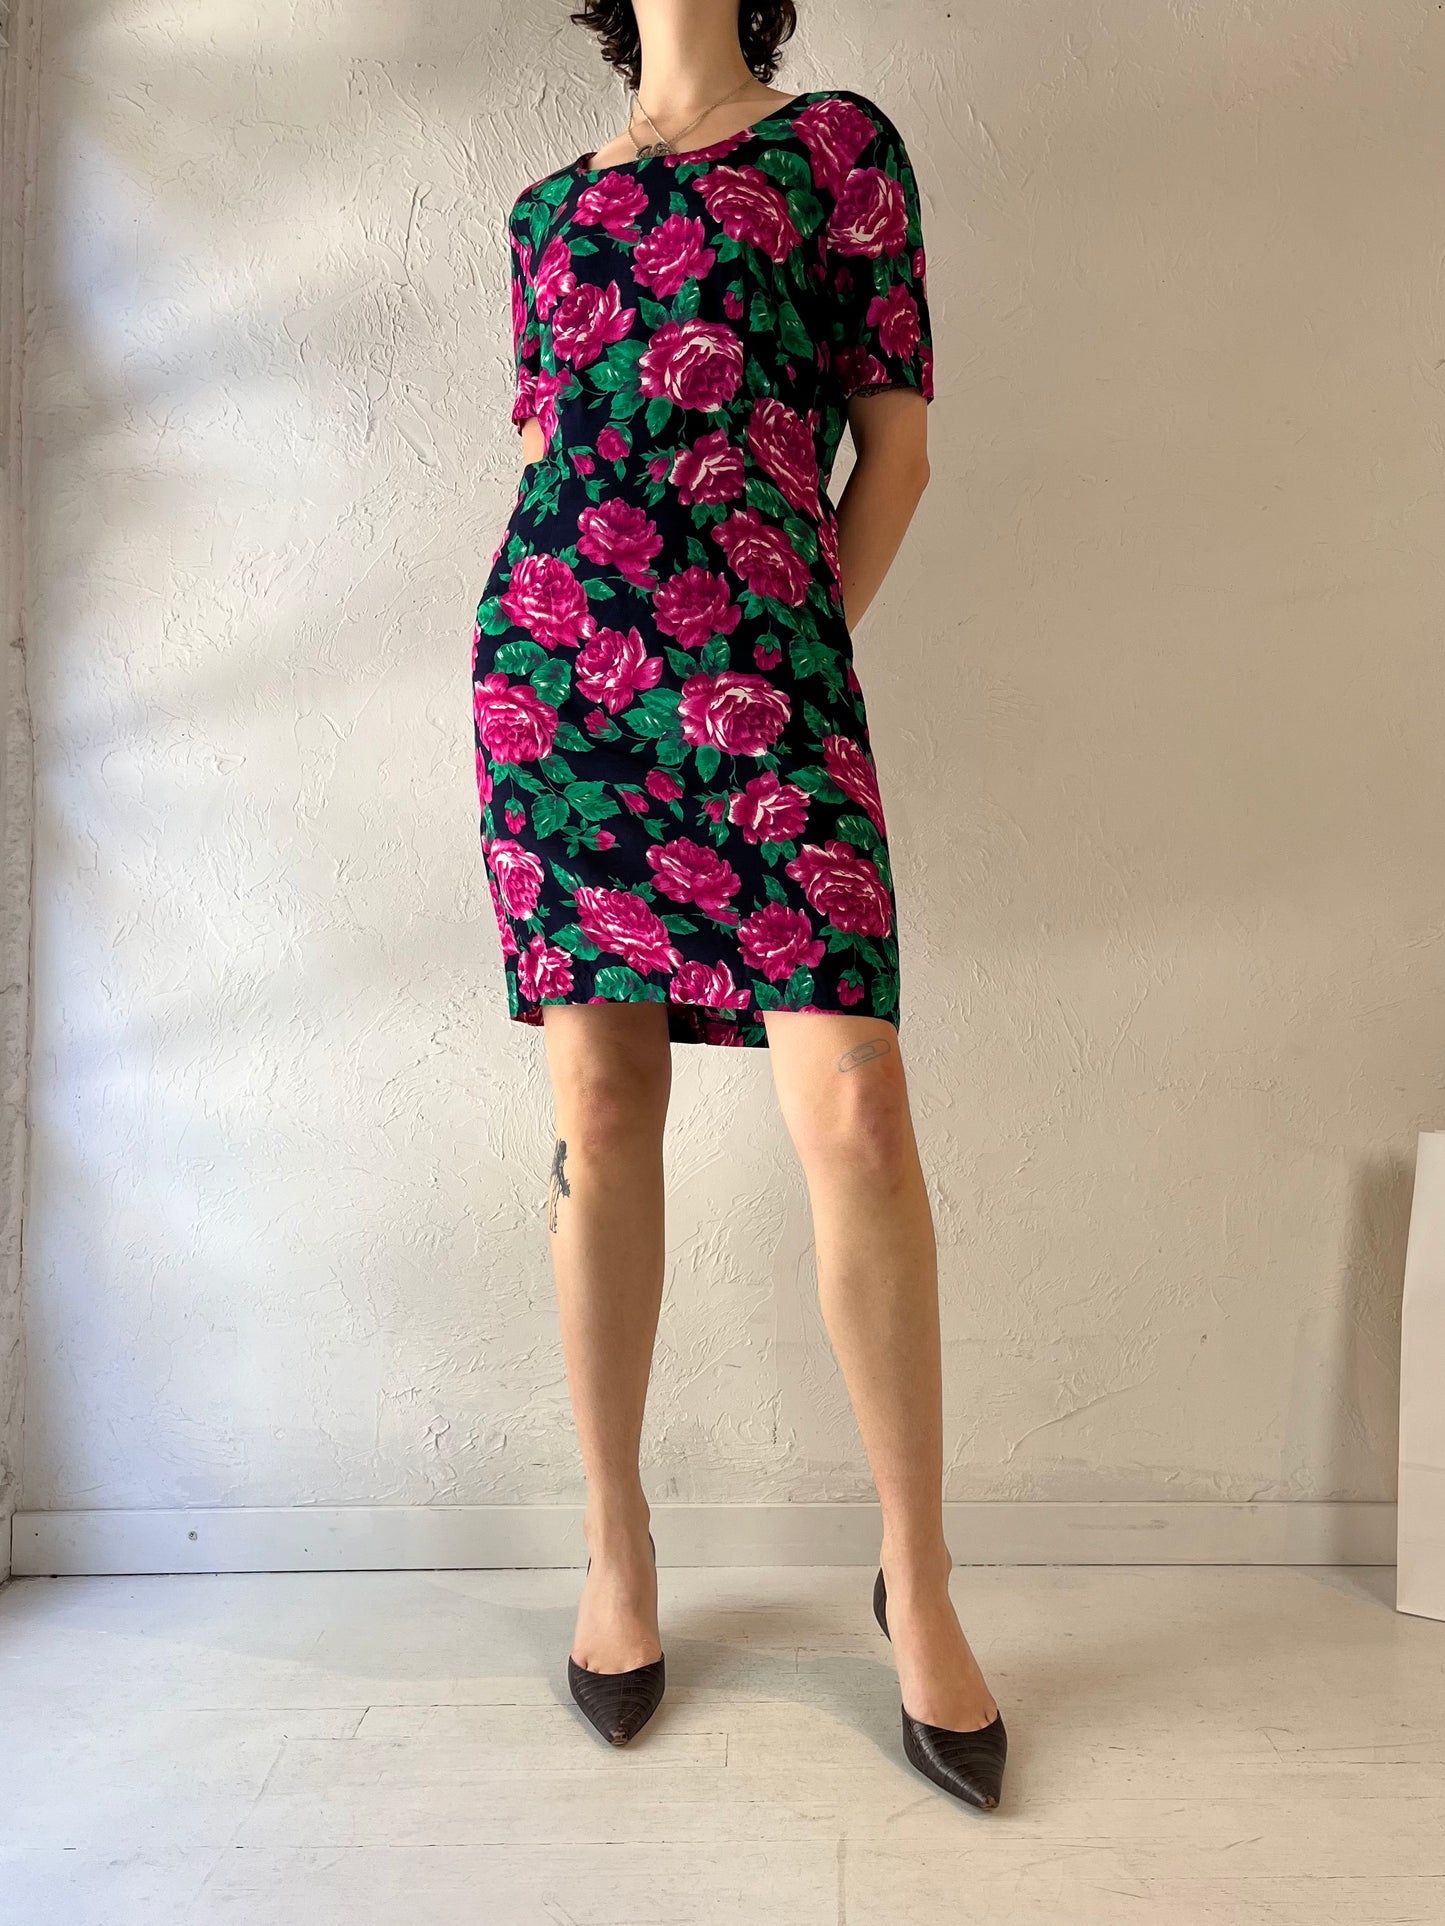 90s 'By Choice' Floral Mini Dress / Medium